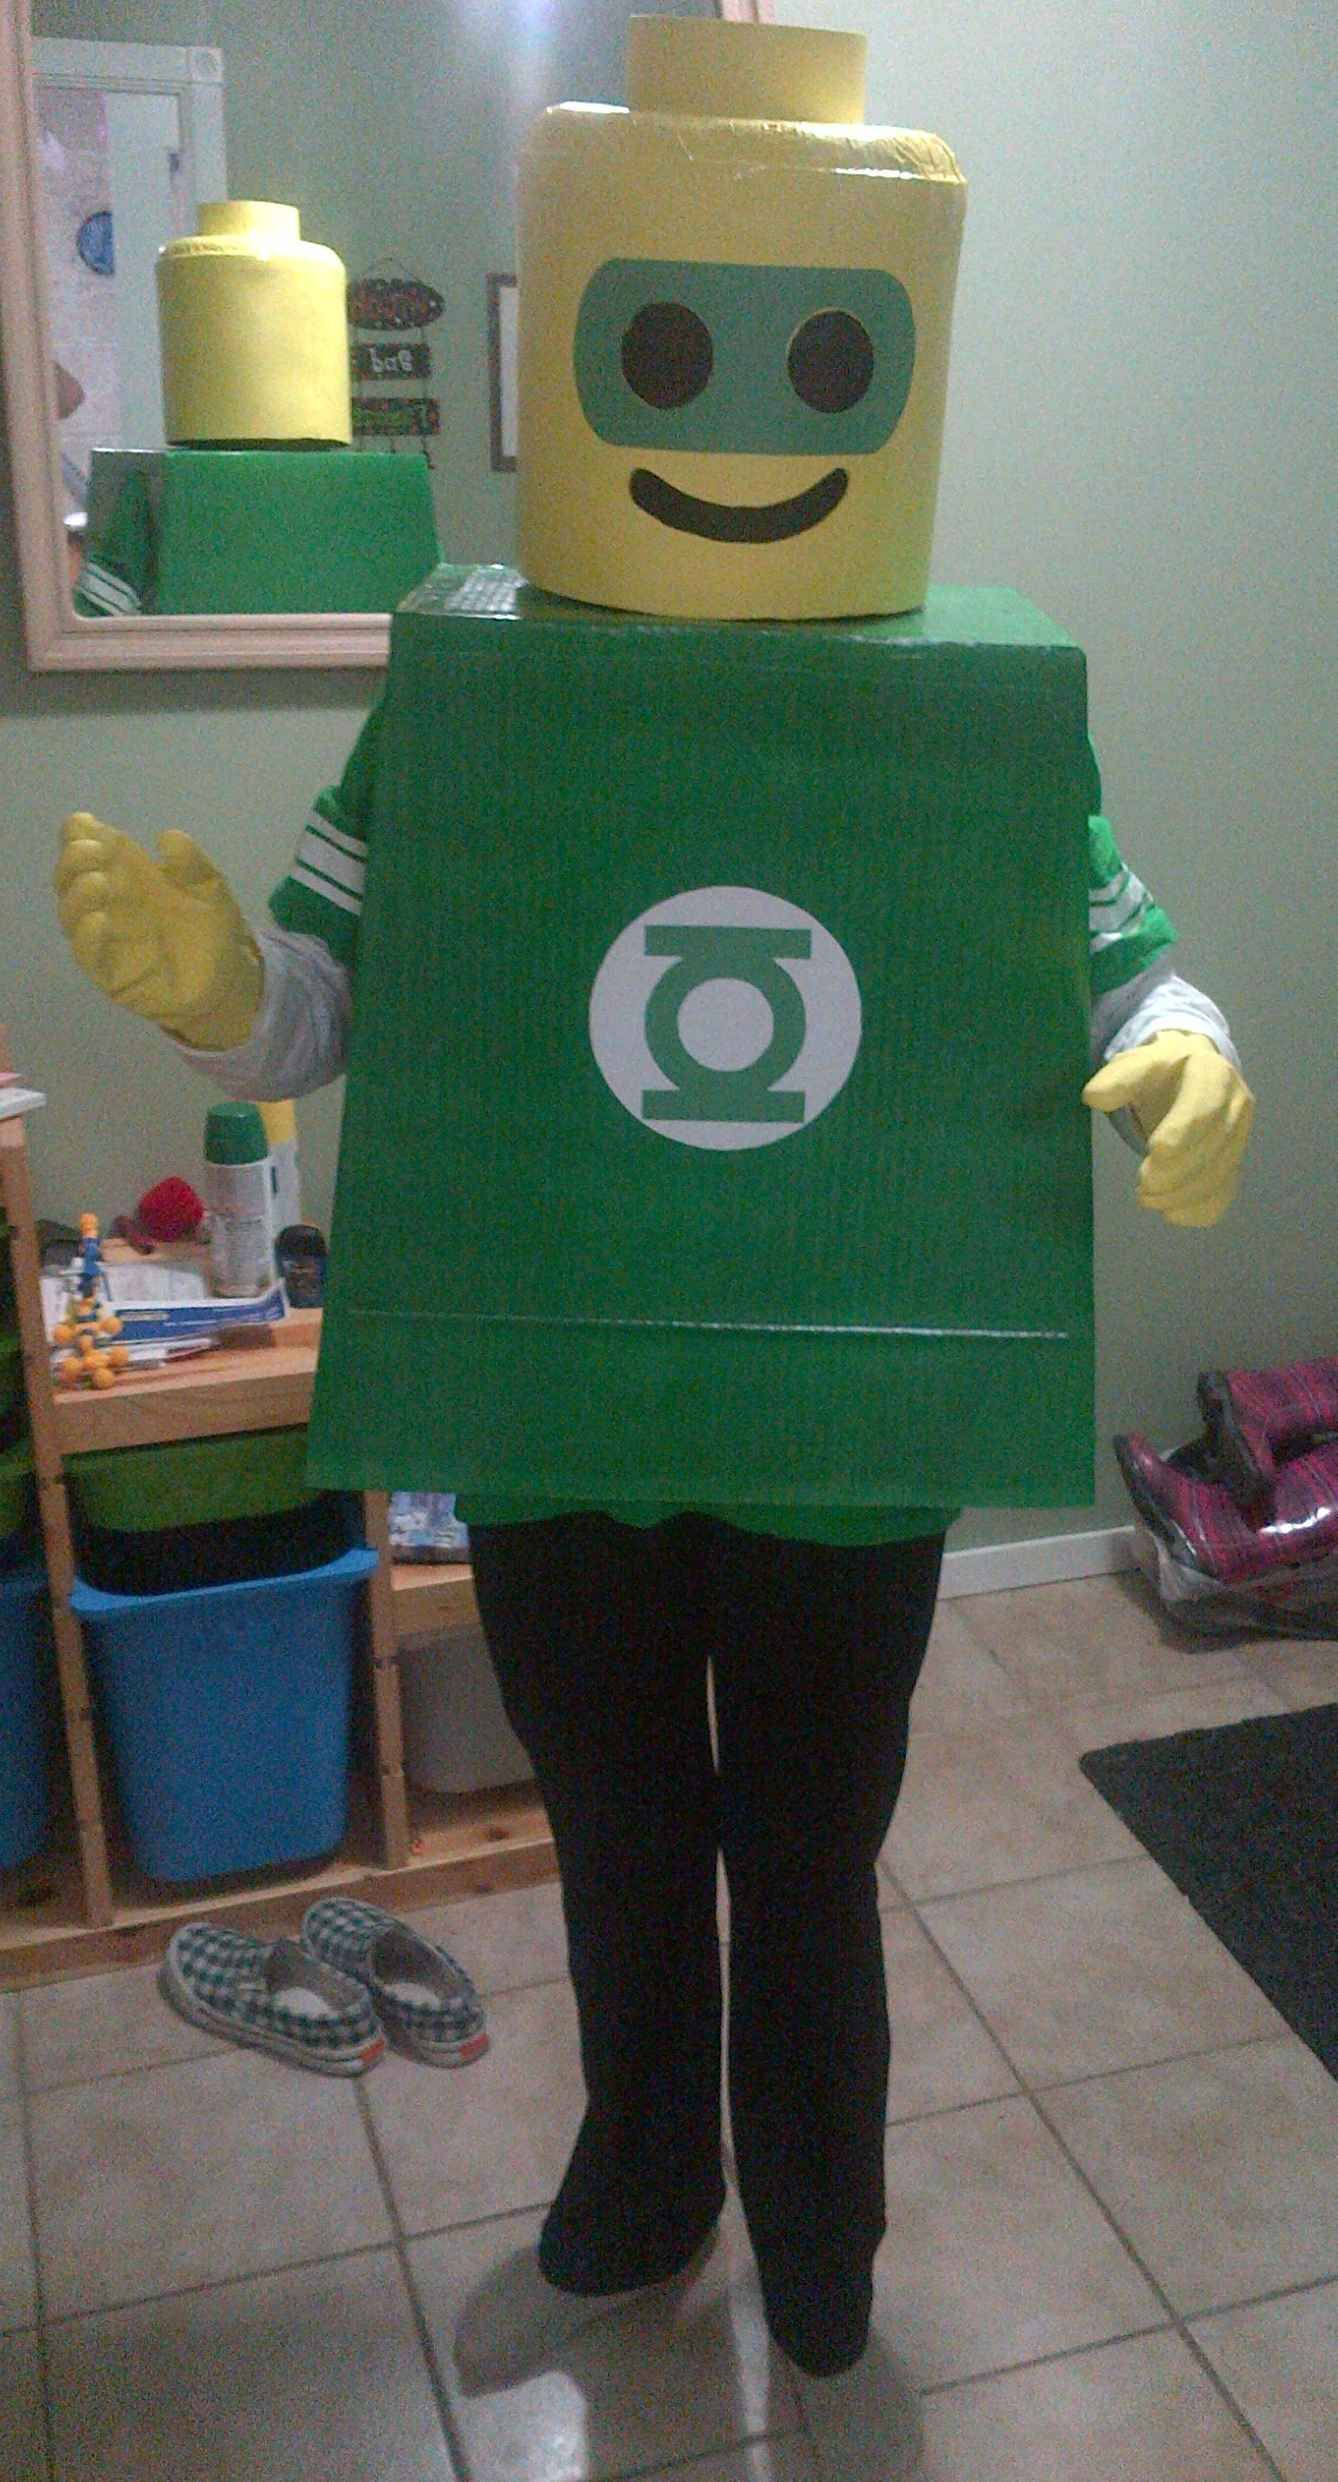 Best ideas about DIY Green Lantern Costume
. Save or Pin Lego Green Lantern mini figure ThinkGeekoween Now.